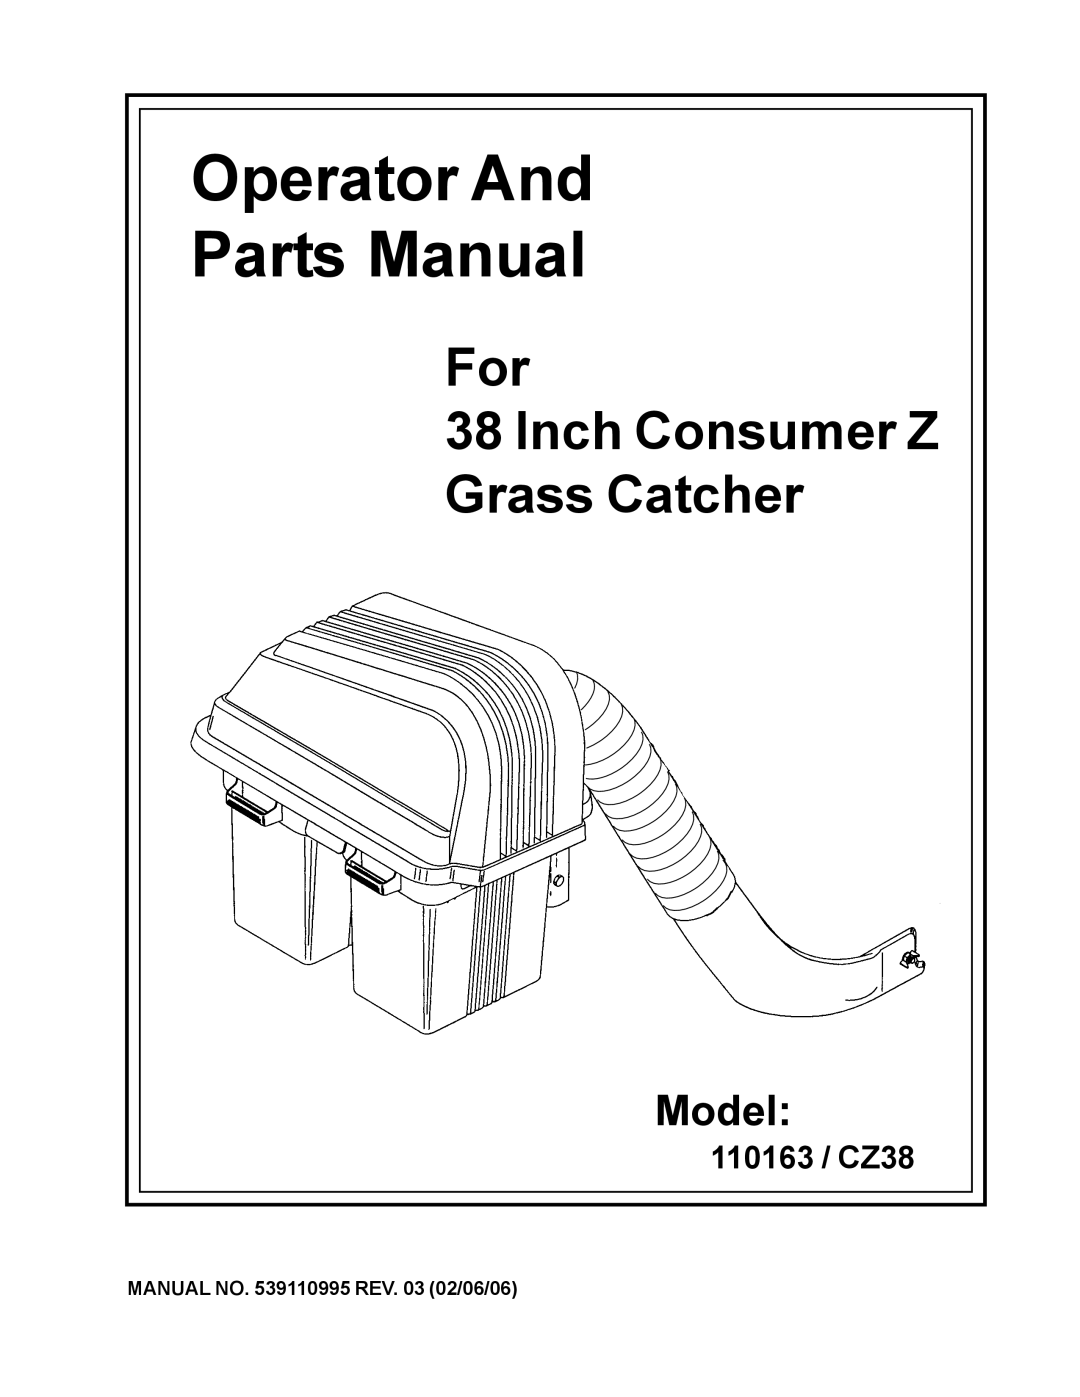 HTC 110163 / CZ38 manual MANUAL NO. 539110995 REV. 03 02/06/06, Operator And Parts Manual, Model 